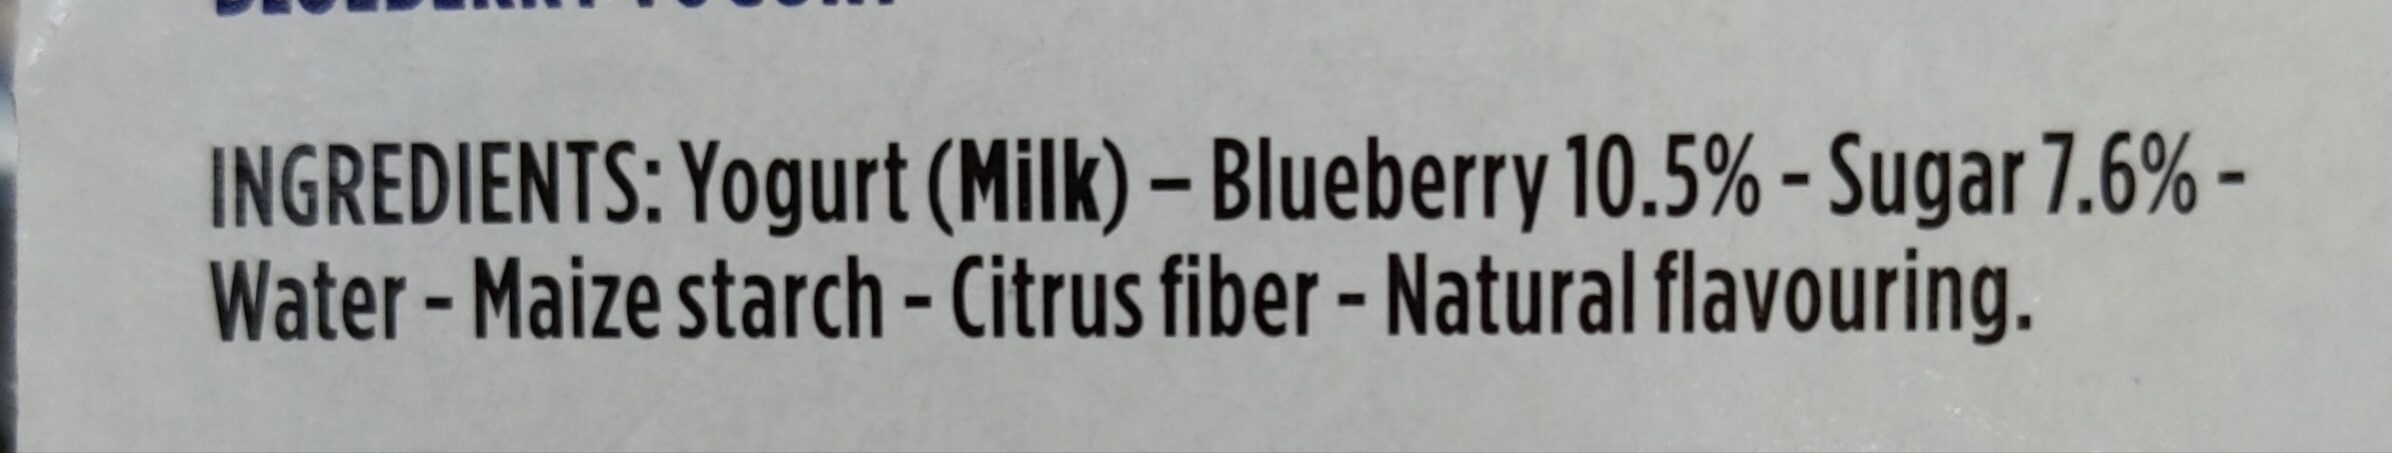 Original Blueberry - Ingredients